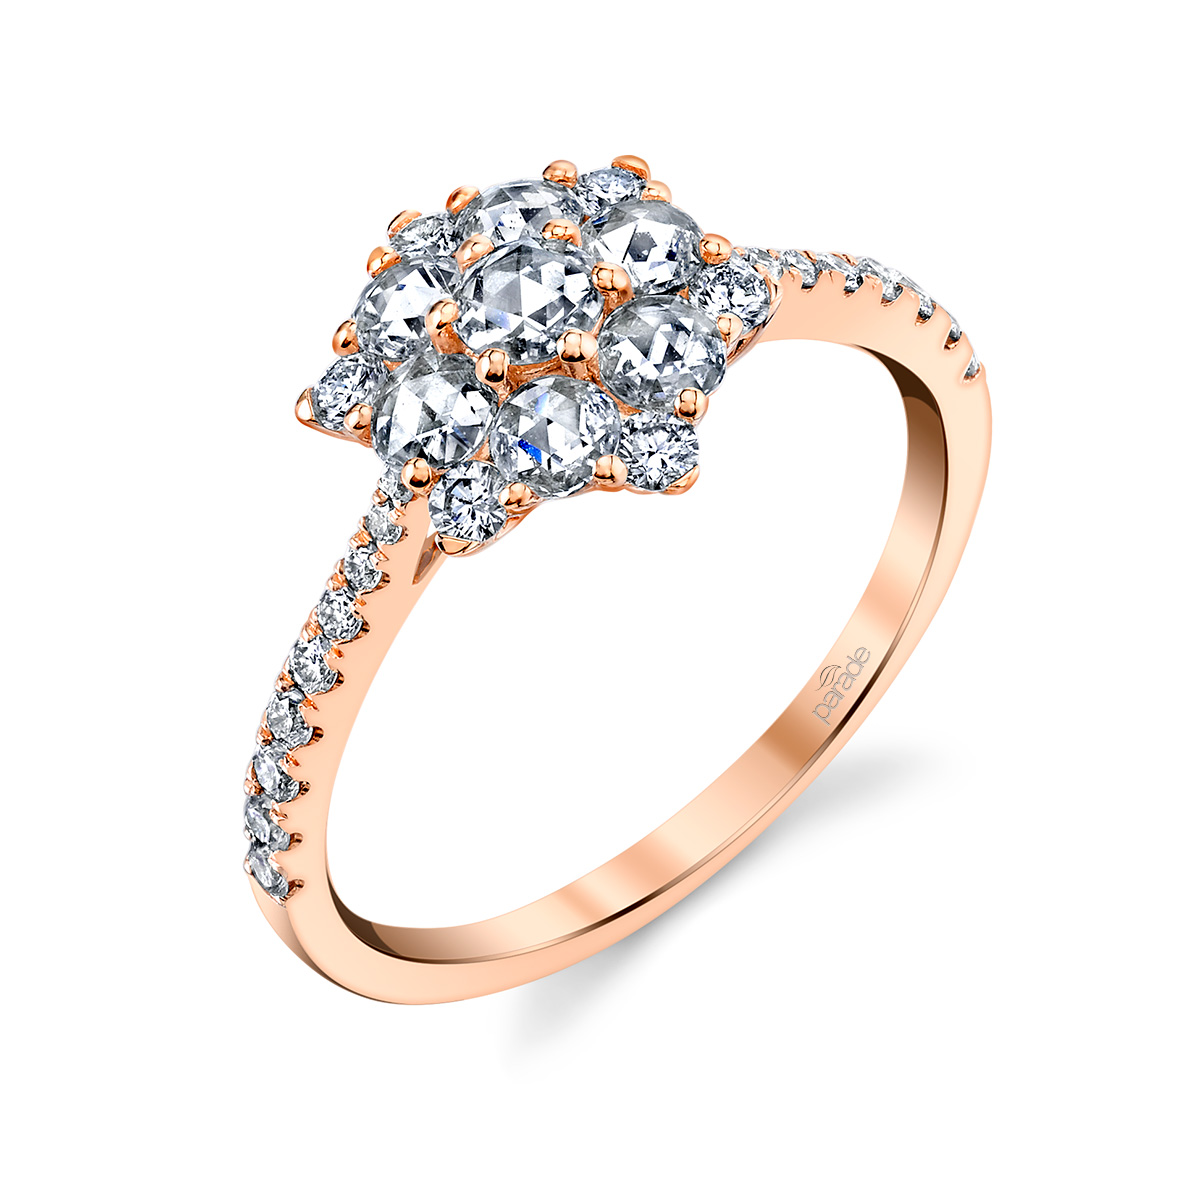 Designer diamond and rose cut diamond fashion ring by Parade Design.